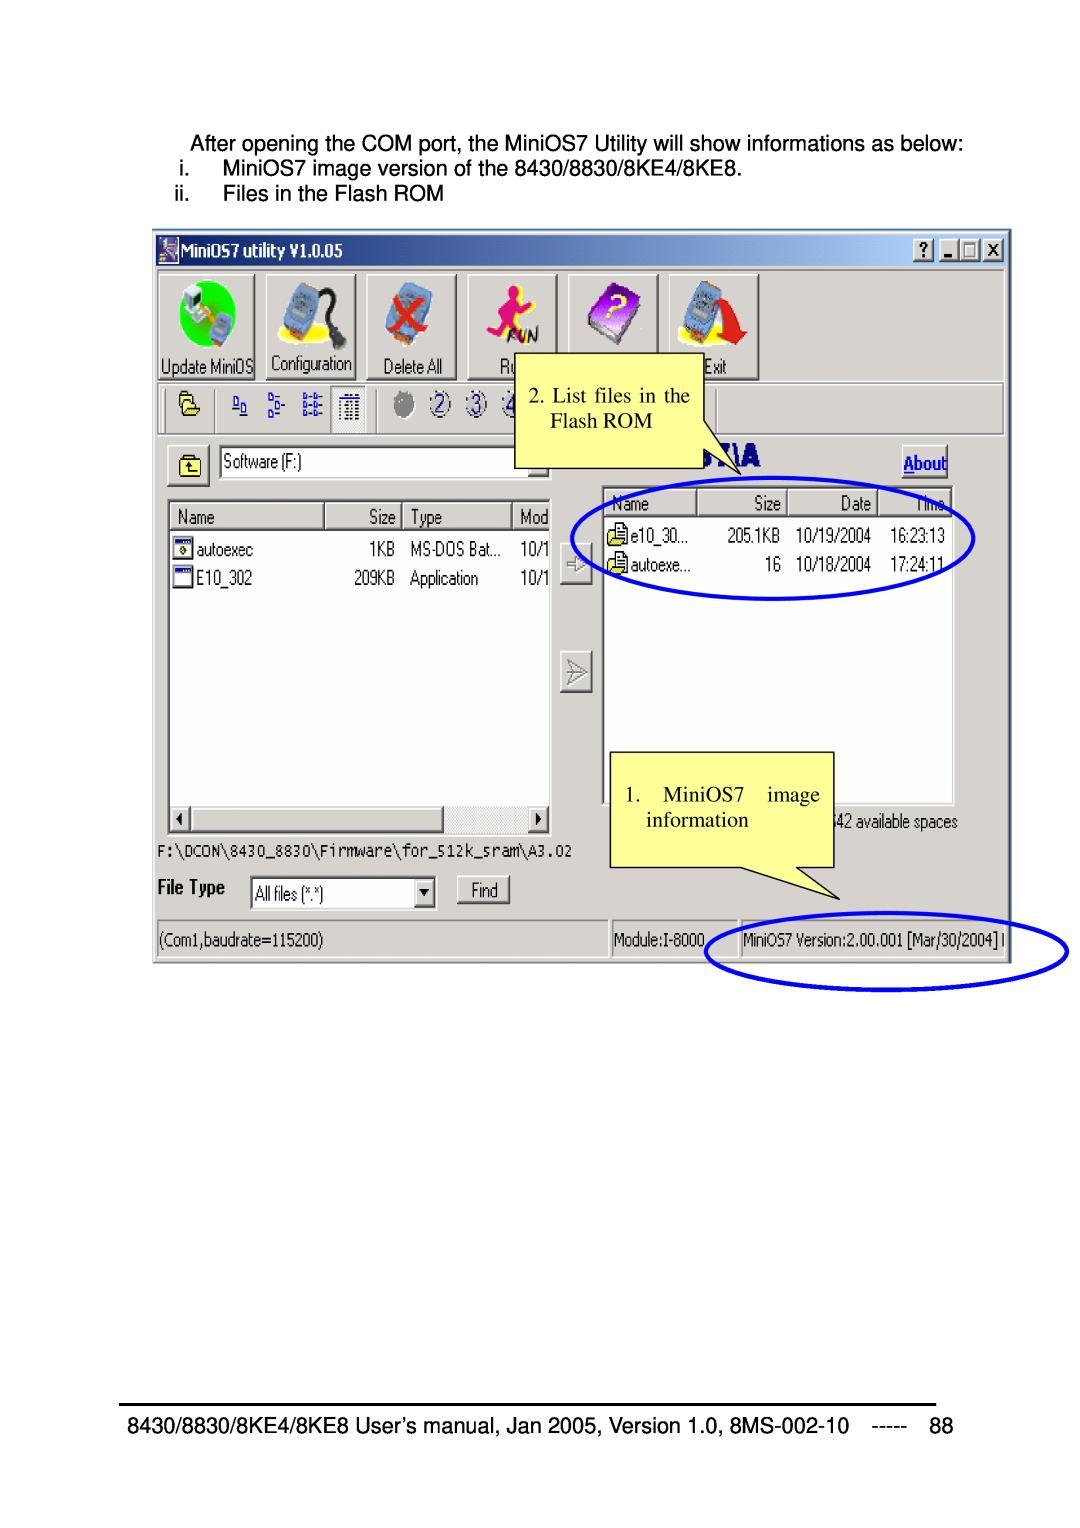 ICP DAS USA 8KE8, 8KE4, 8430, 8830 List files in the Flash ROM 1. MiniOS7 image information, ii. Files in the Flash ROM 